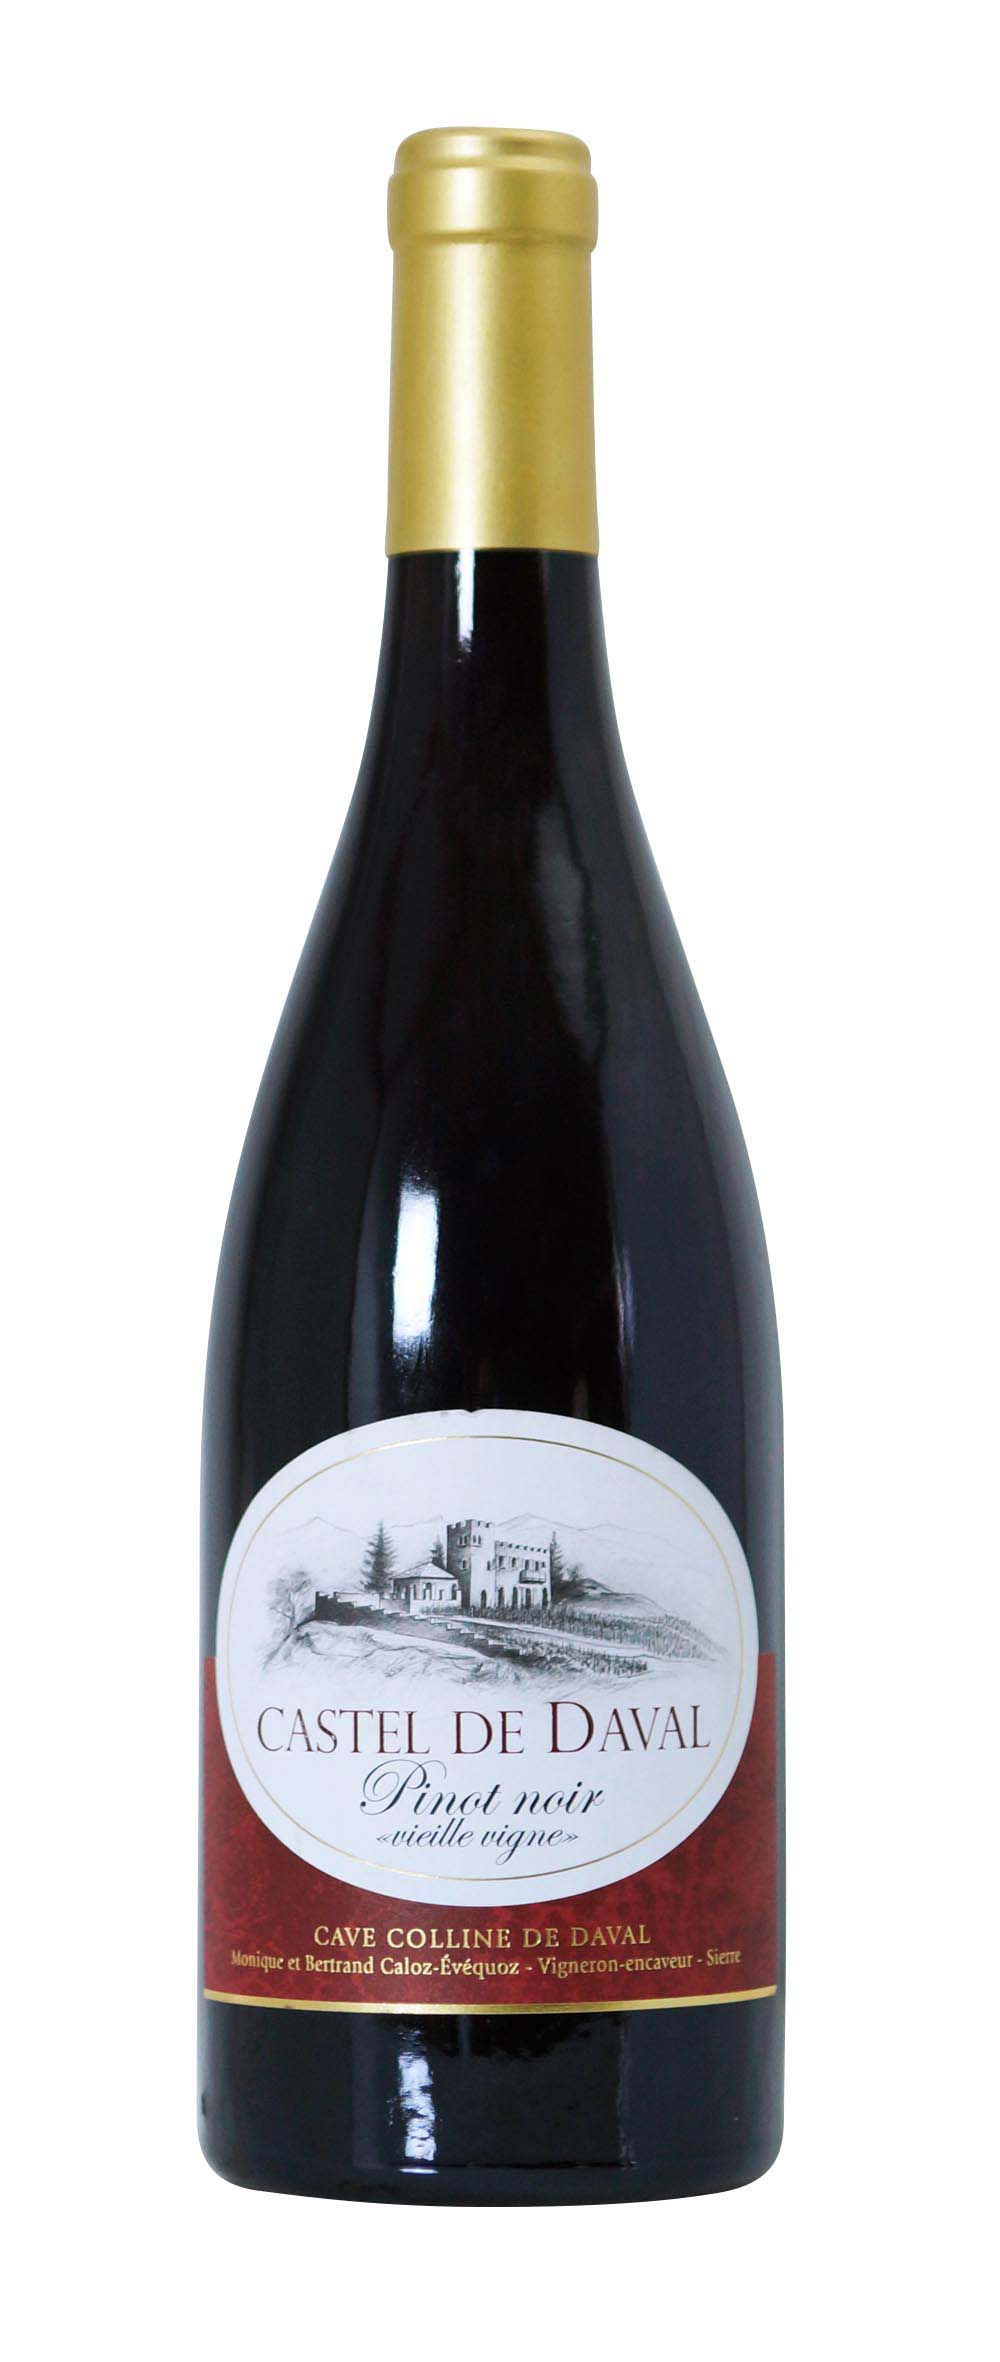 Valais AOC Castel de Daval Pinot Noir Vieille Vigne 2014